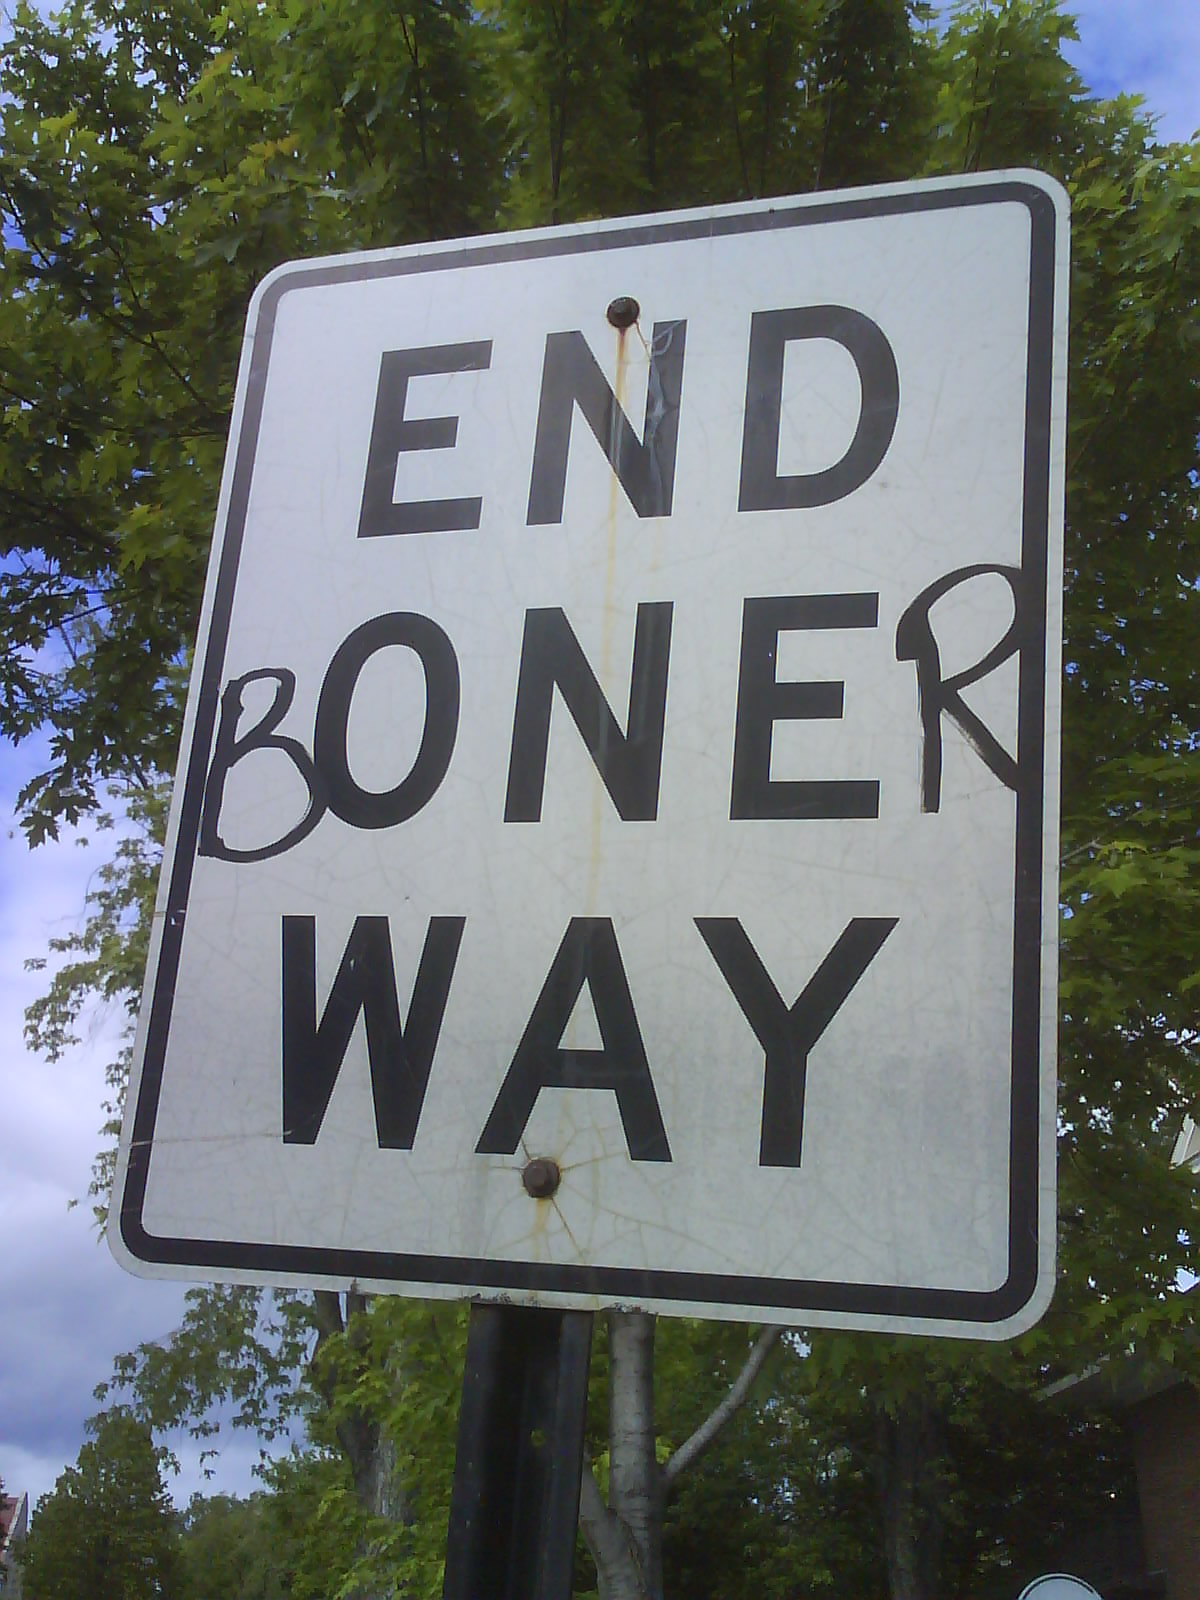 End Boner Way